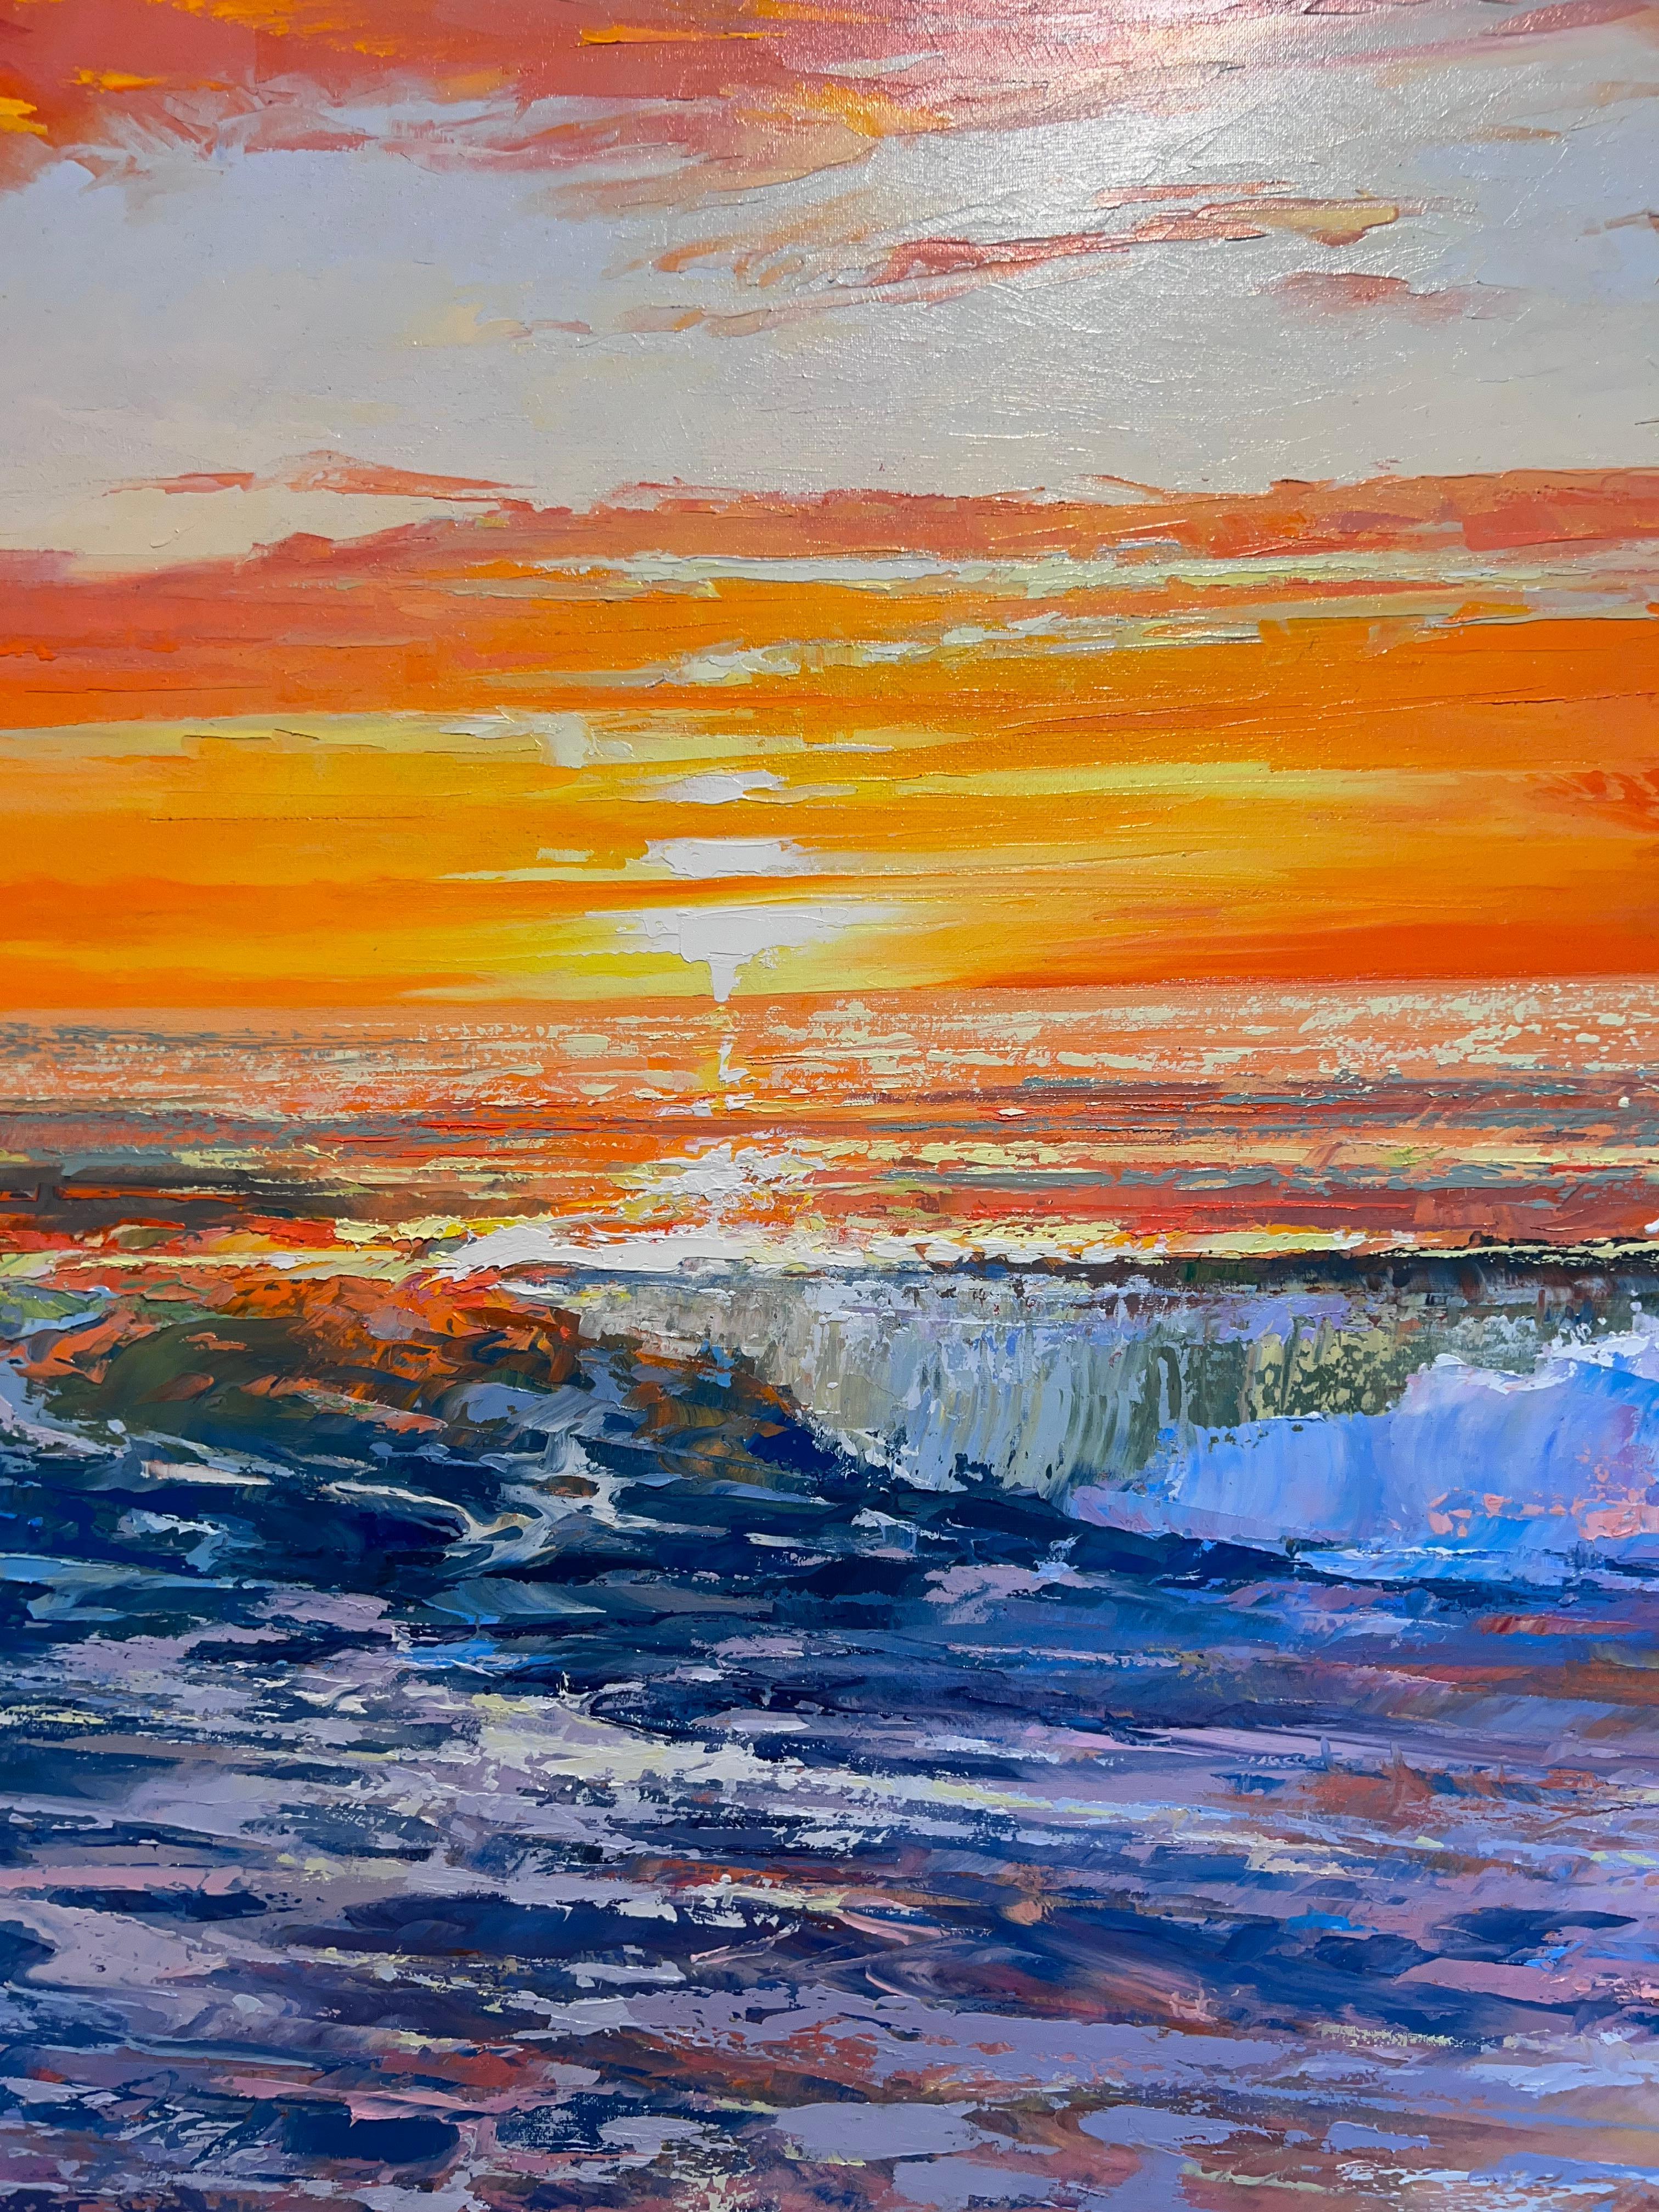 Die Goldene Stunde - Moderne Kunst - Impressionistische Meereslandschaft - Vivid Color - Kontemporäre Kunst – Painting von Nicholas Vivian